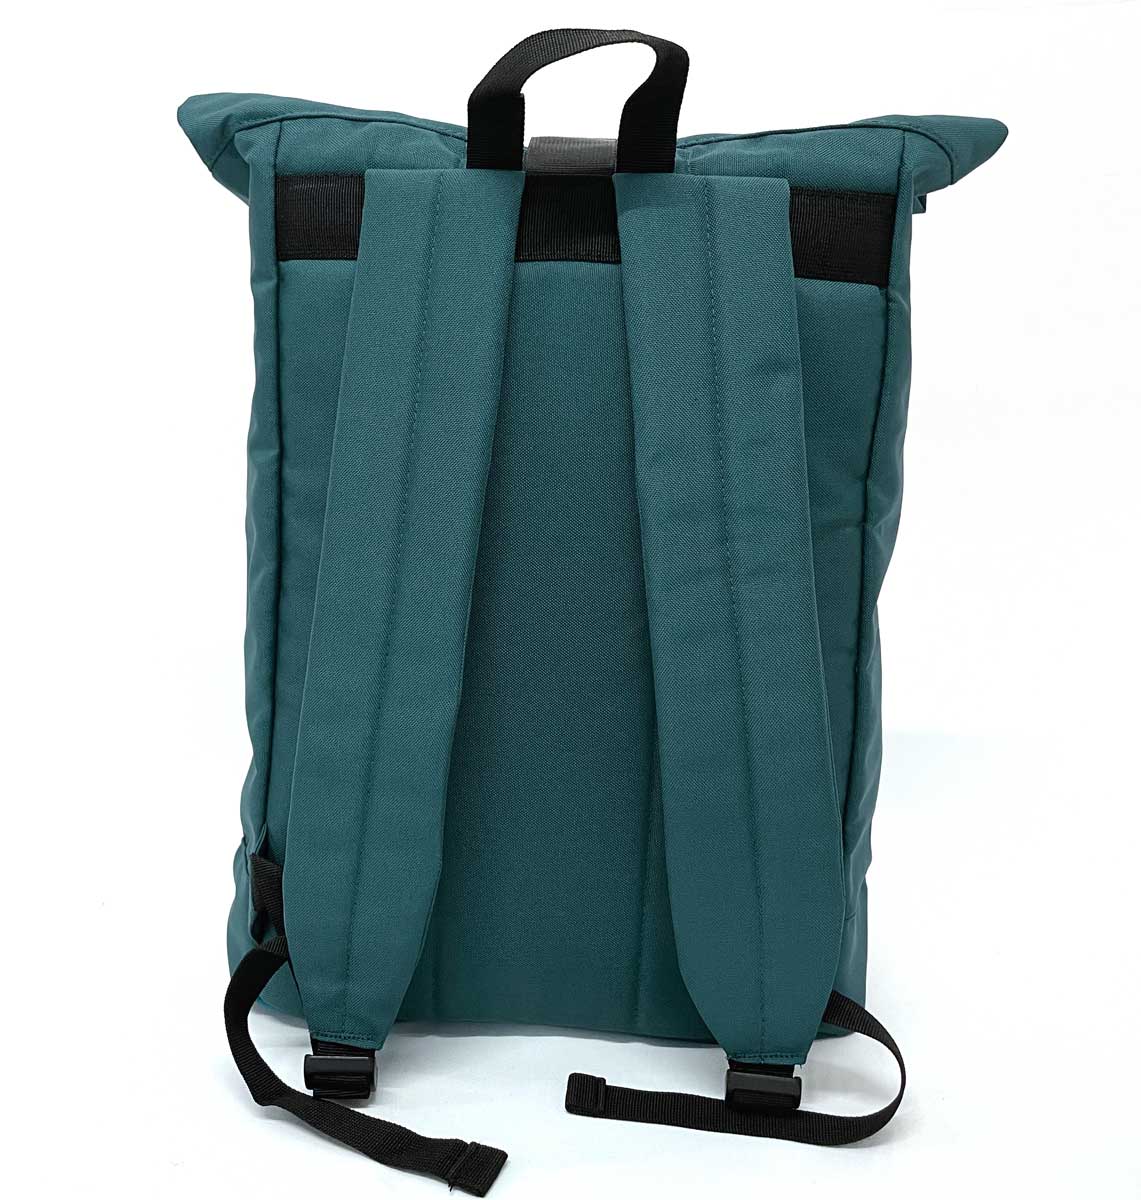 Corgi Beach Roll-top Recycled Backpack - Blue Panda